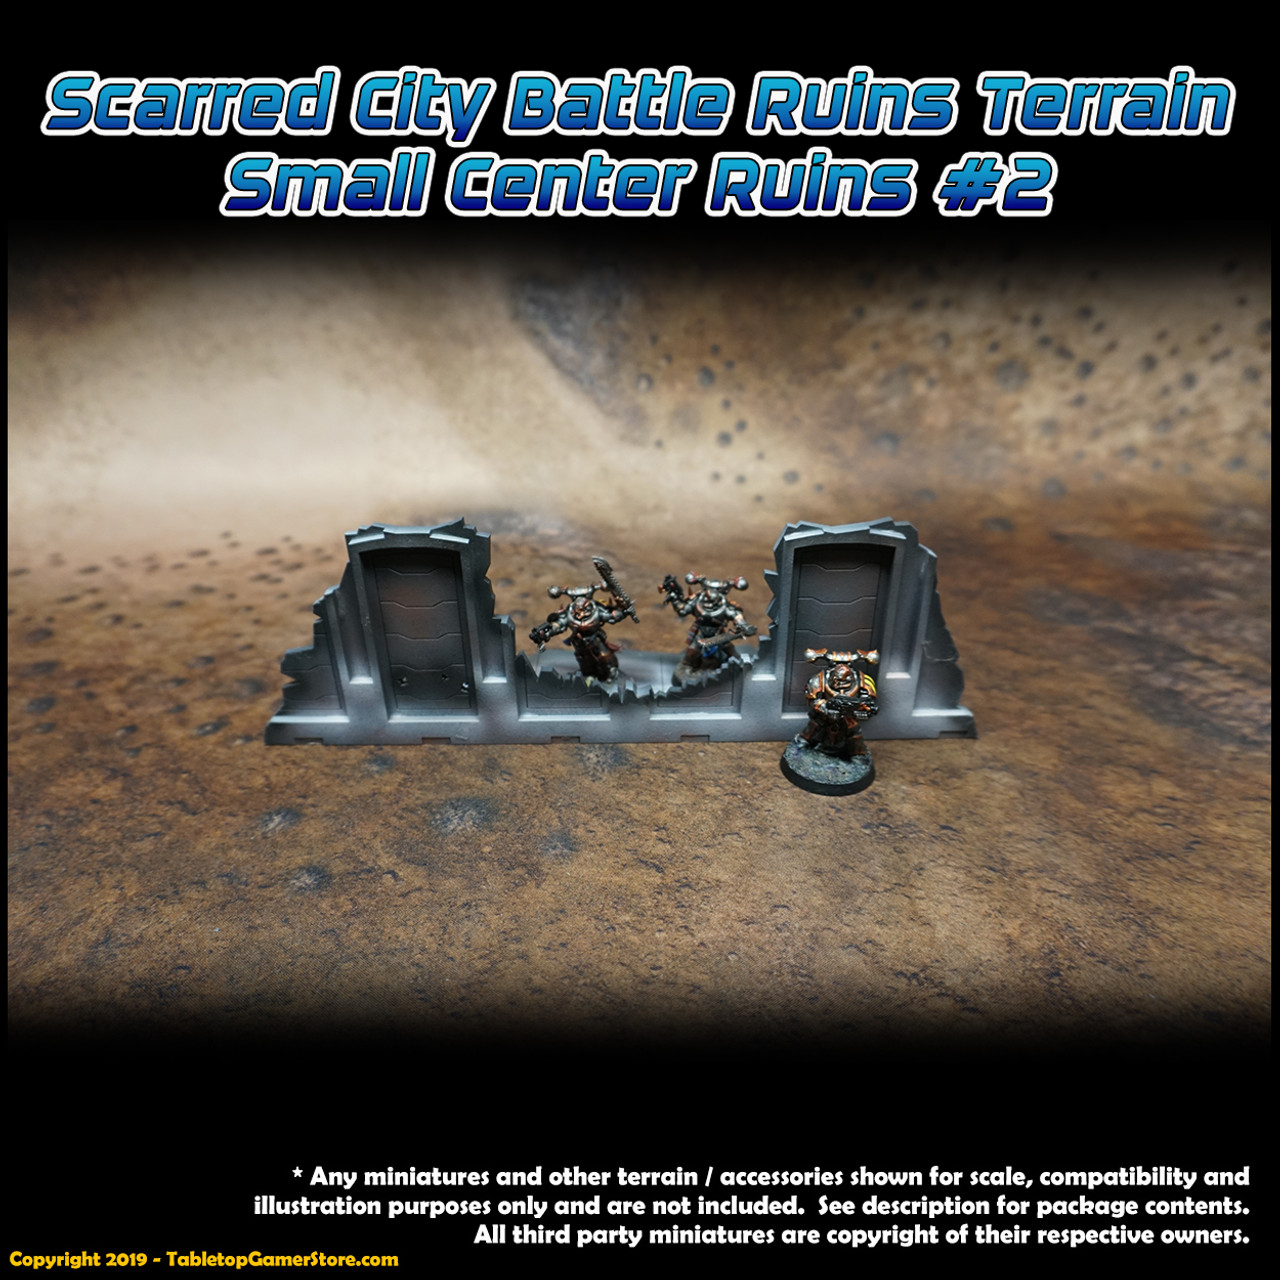 Scarred City Battle Ruins Terrain - Small Center Ruins 2